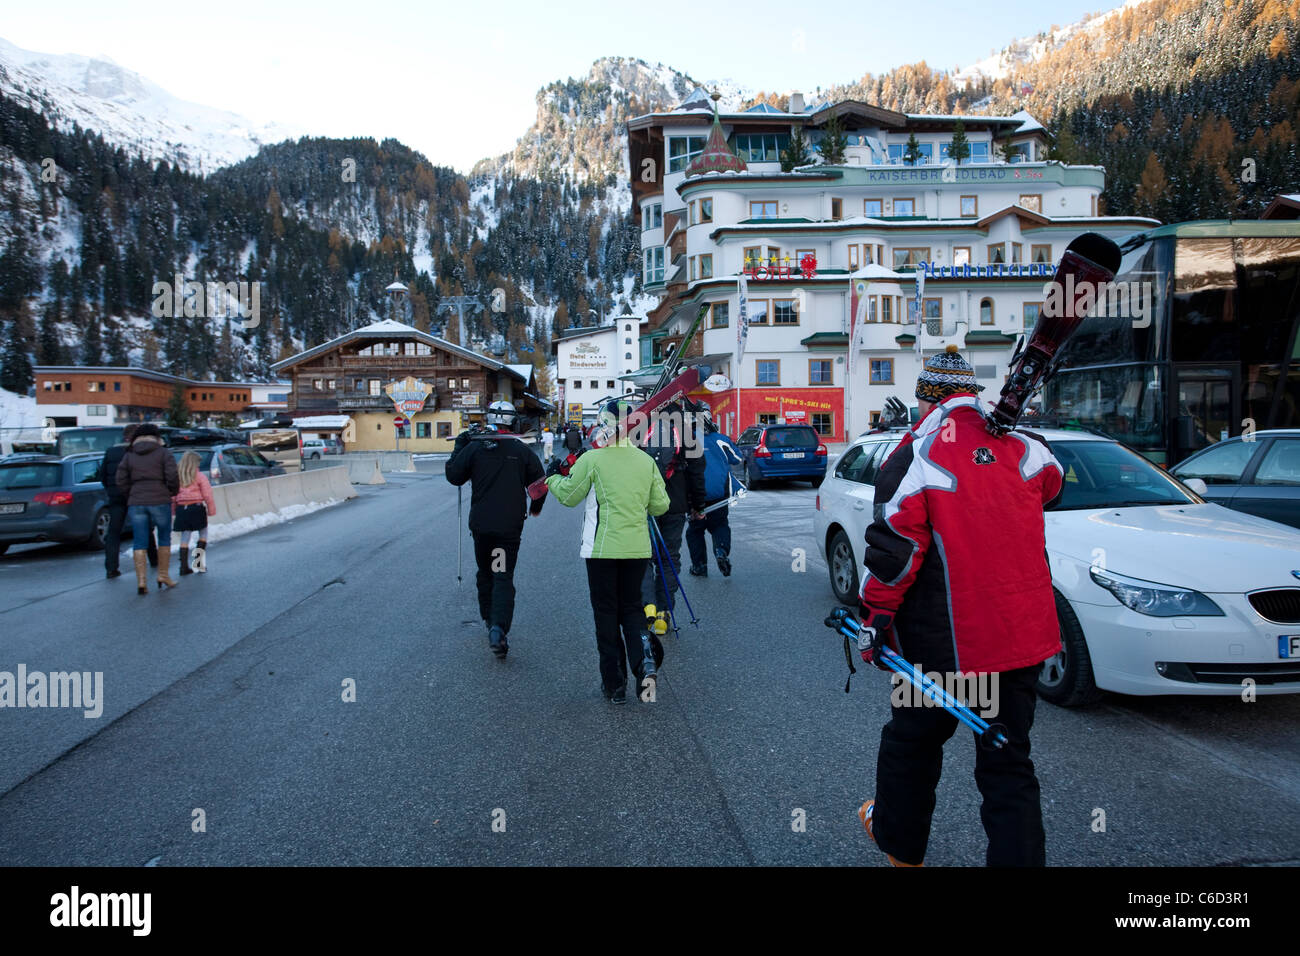 Wintersportler auf dem Weg zum Skilift, Hintertux, la gente sulla strada per lo ski-lift, Hintertux Foto Stock